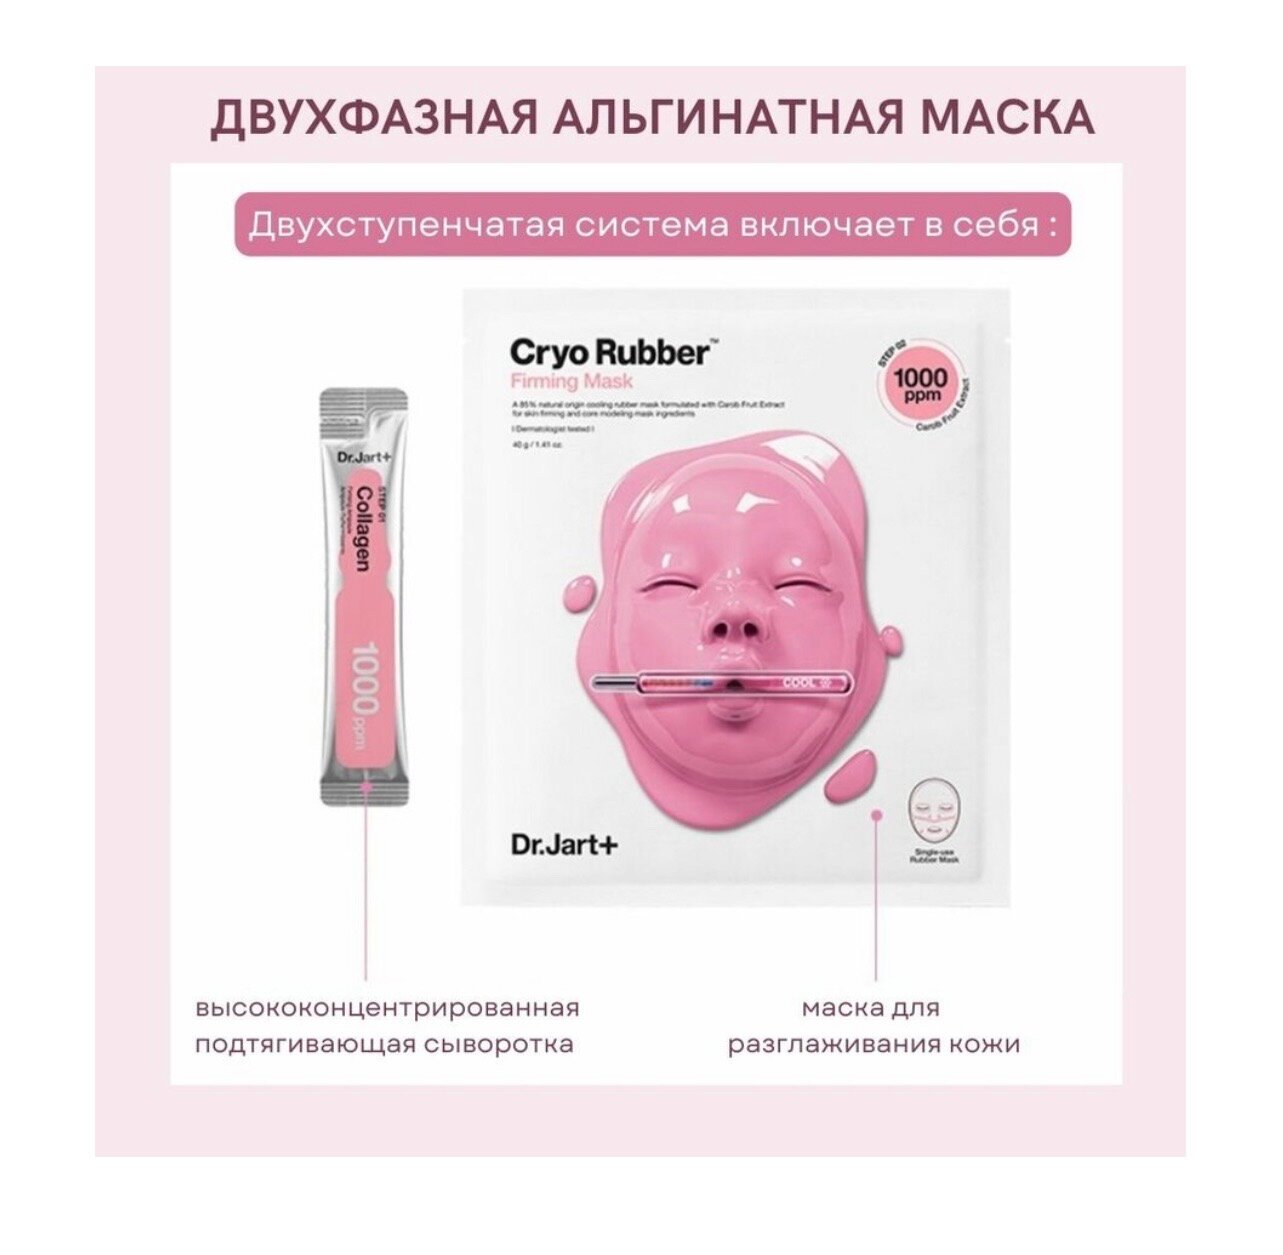 Dr. Jart+ Cryo Rubber with Firming Collagen альгинатная подтягивающая маска, 50 г, 4 мл